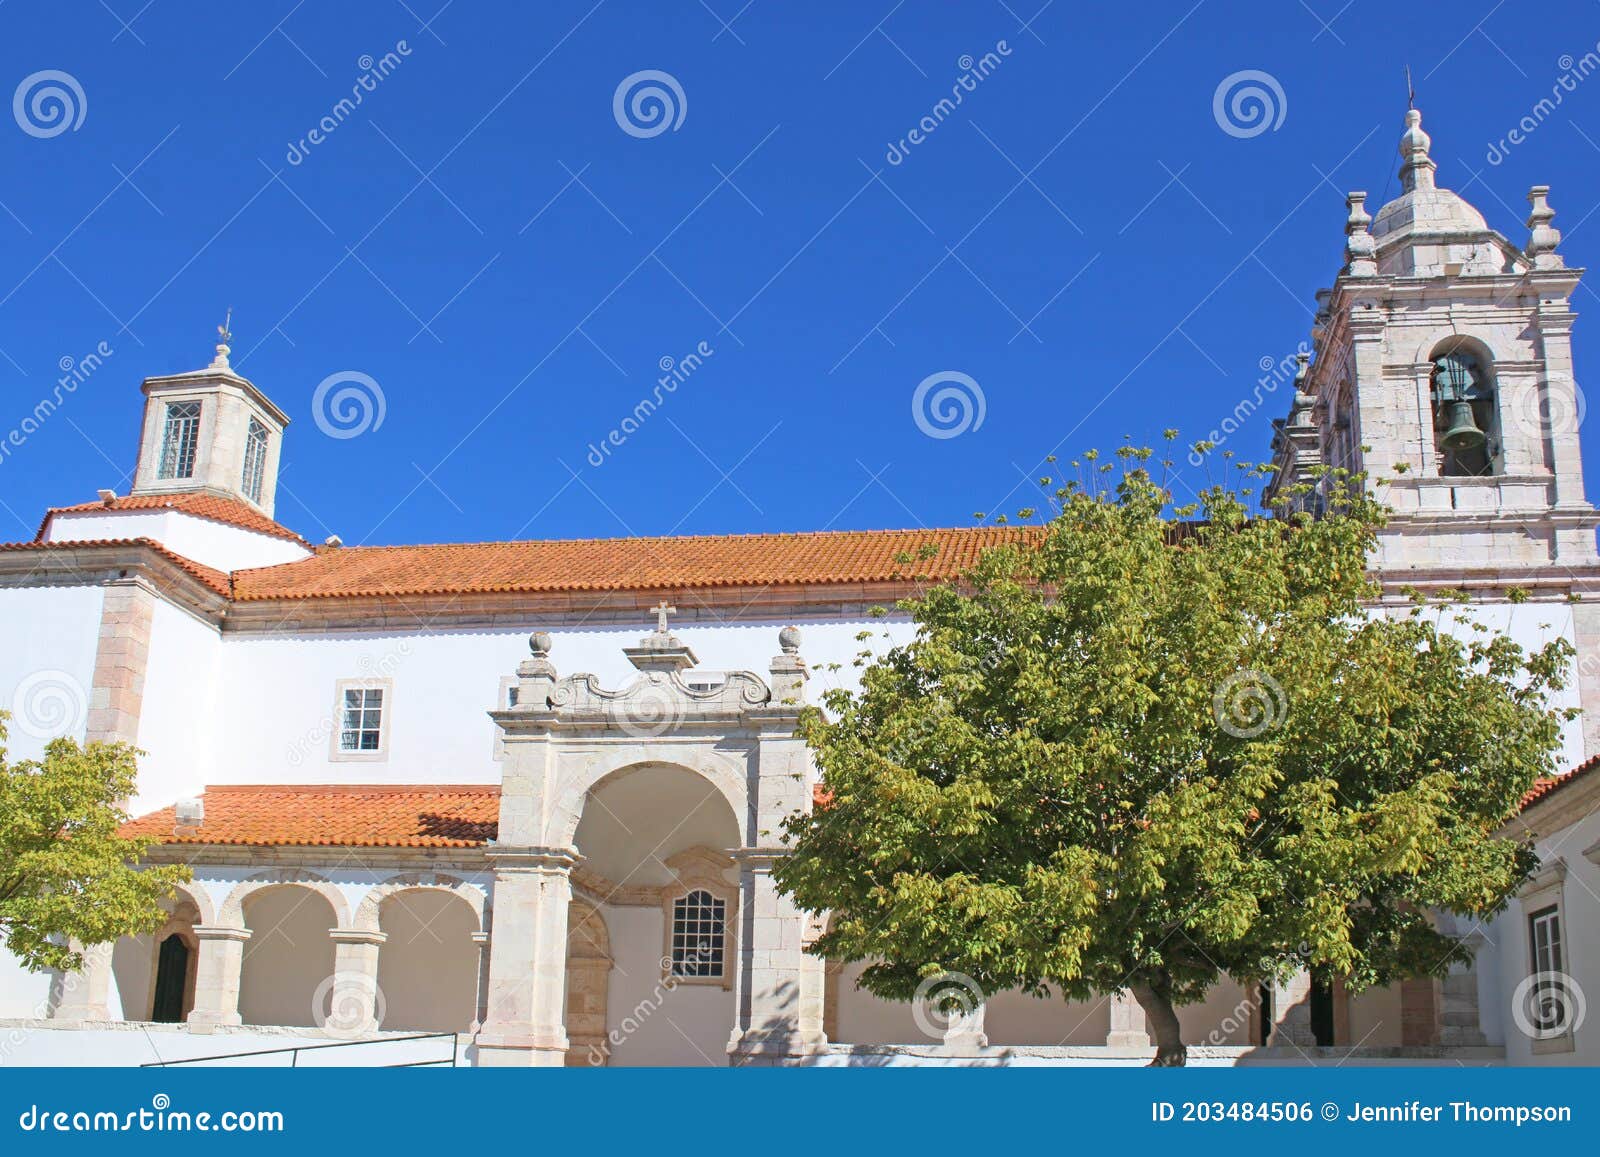 church of nossa senhora da nazare, sitio,